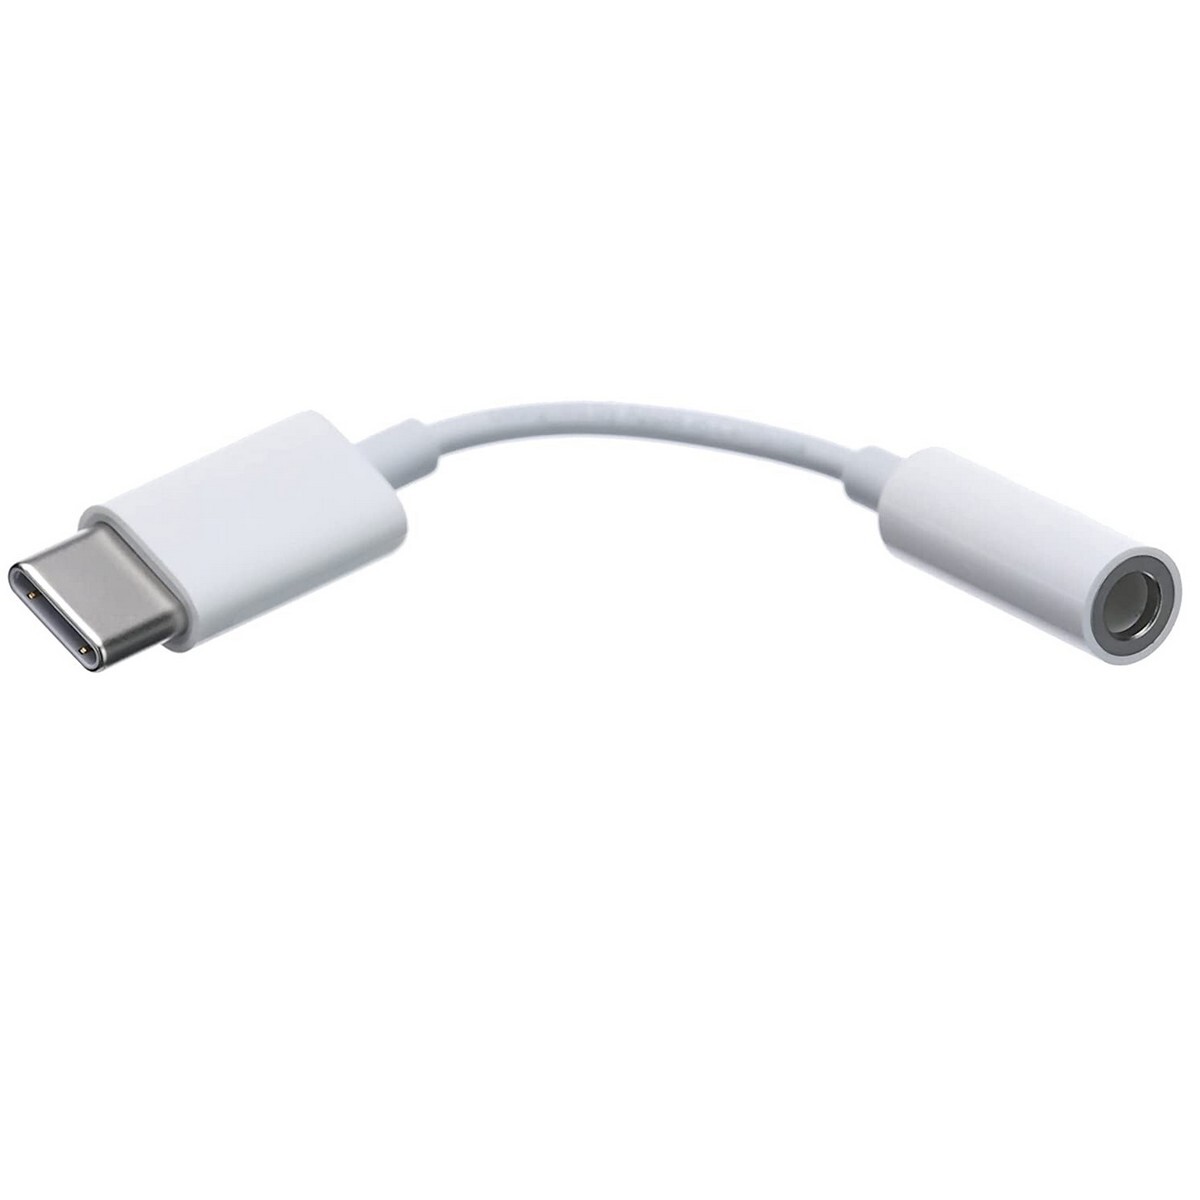 Apple USB-C to 3.5 mm Headphone Jack Adapter - USB-C to headphone